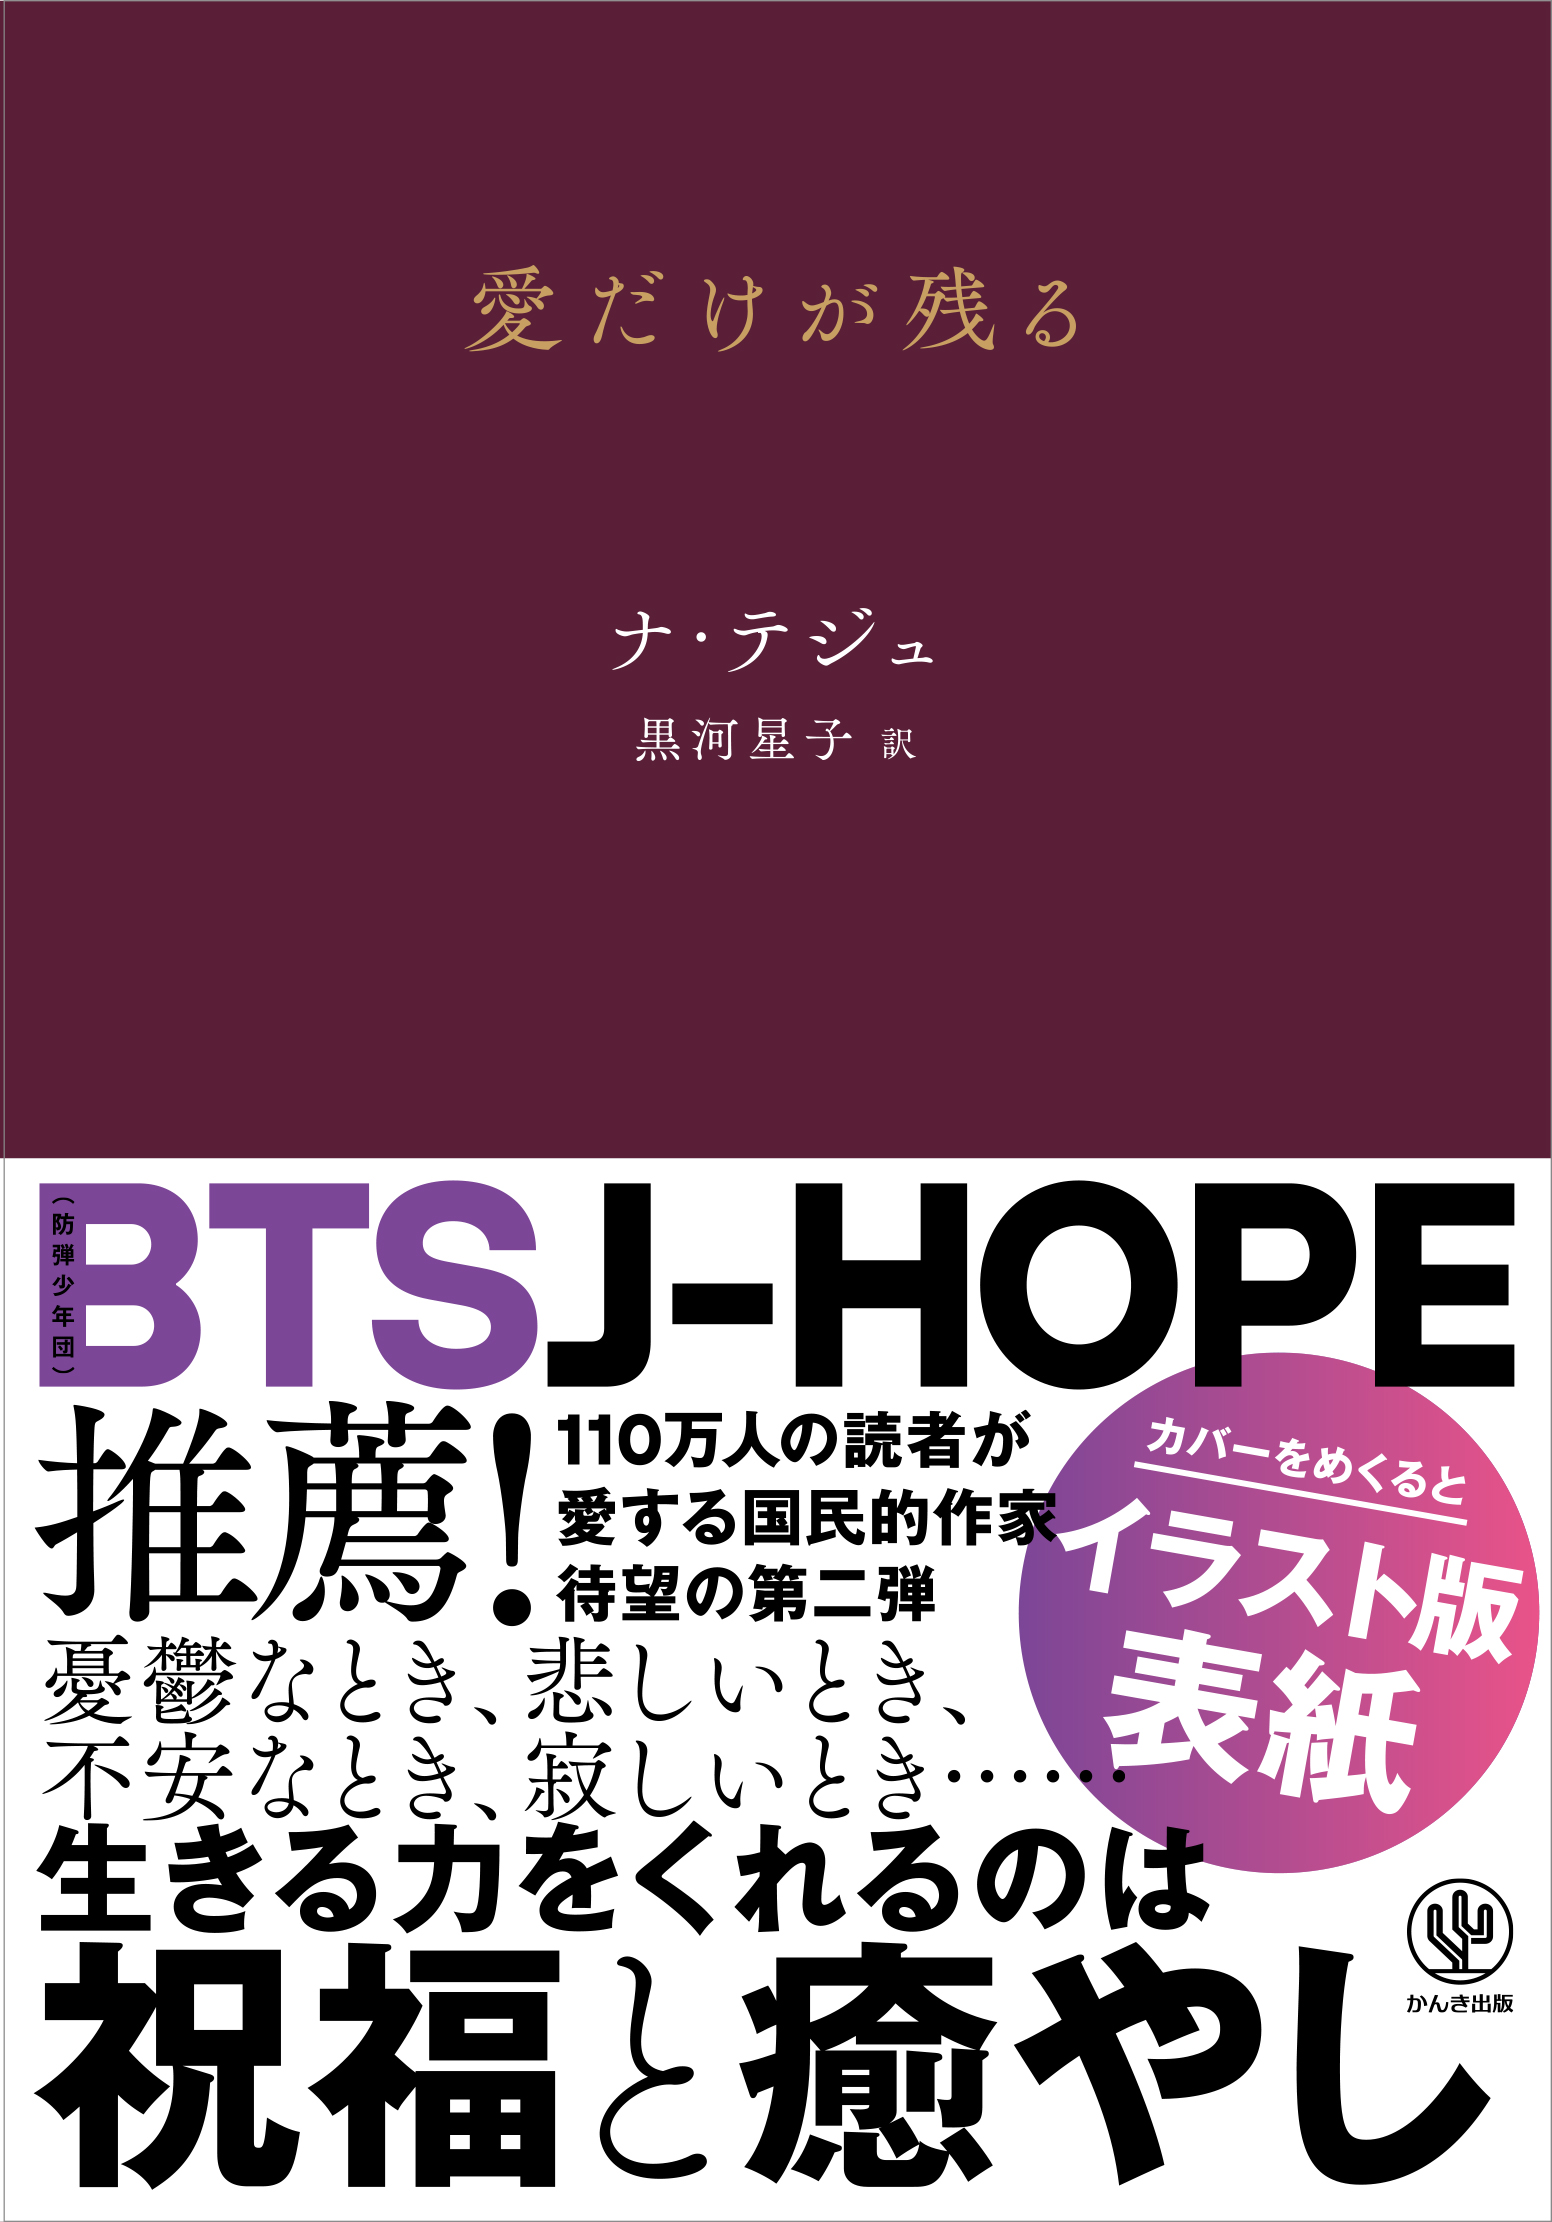 Bts 防弾少年団 J Hope 2pm Jun Kほか多くの韓国スターが愛読する詩集が日本上陸 国民的作家による待望の第2弾は 愛 がテーマ Newscast